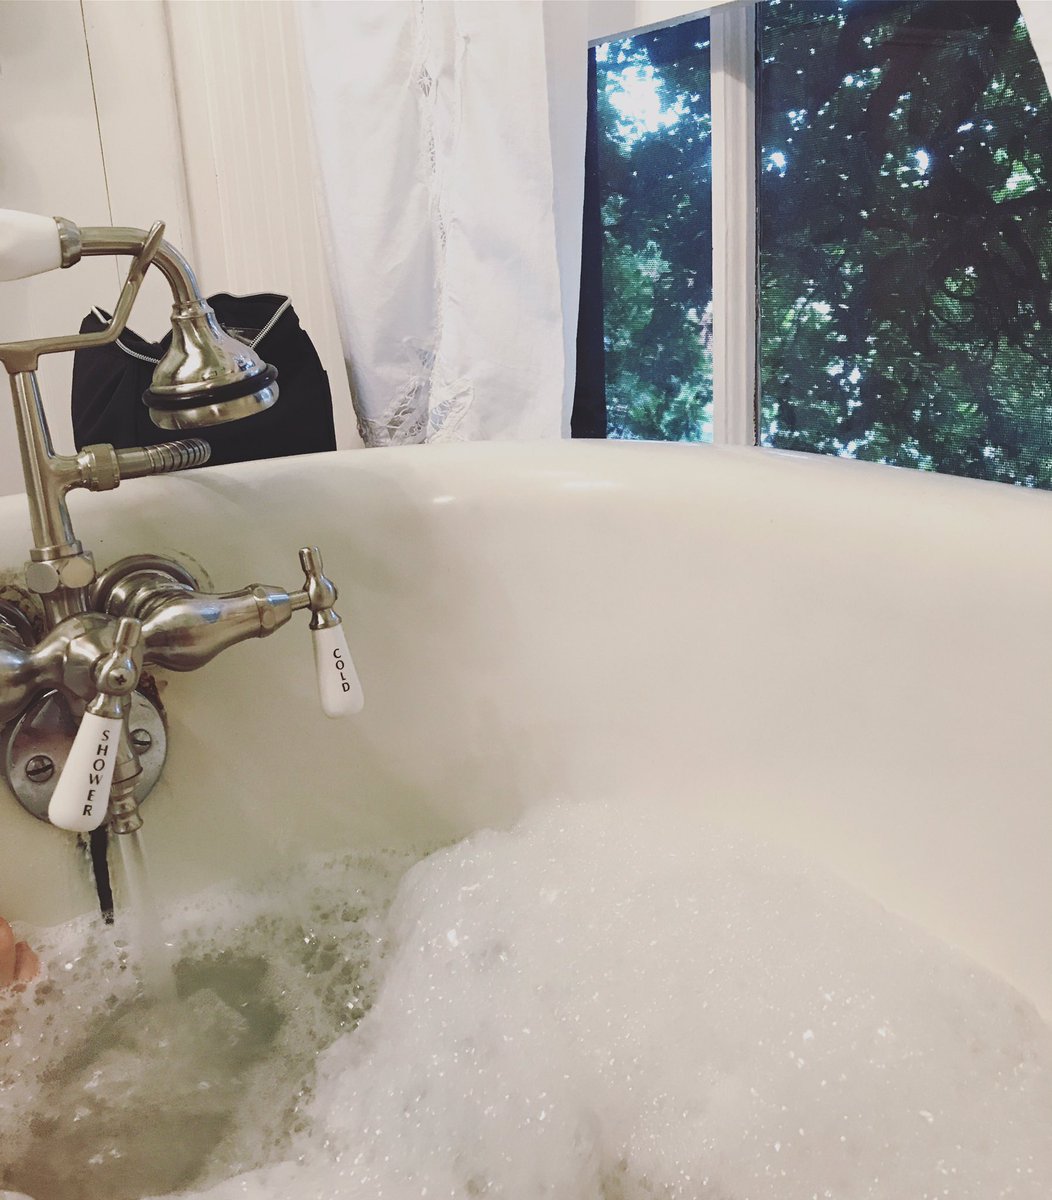 Hot bubble bath. Hot coffee. Good book. Claw foot tub. Hello, summer. #easttexas #providencehouse